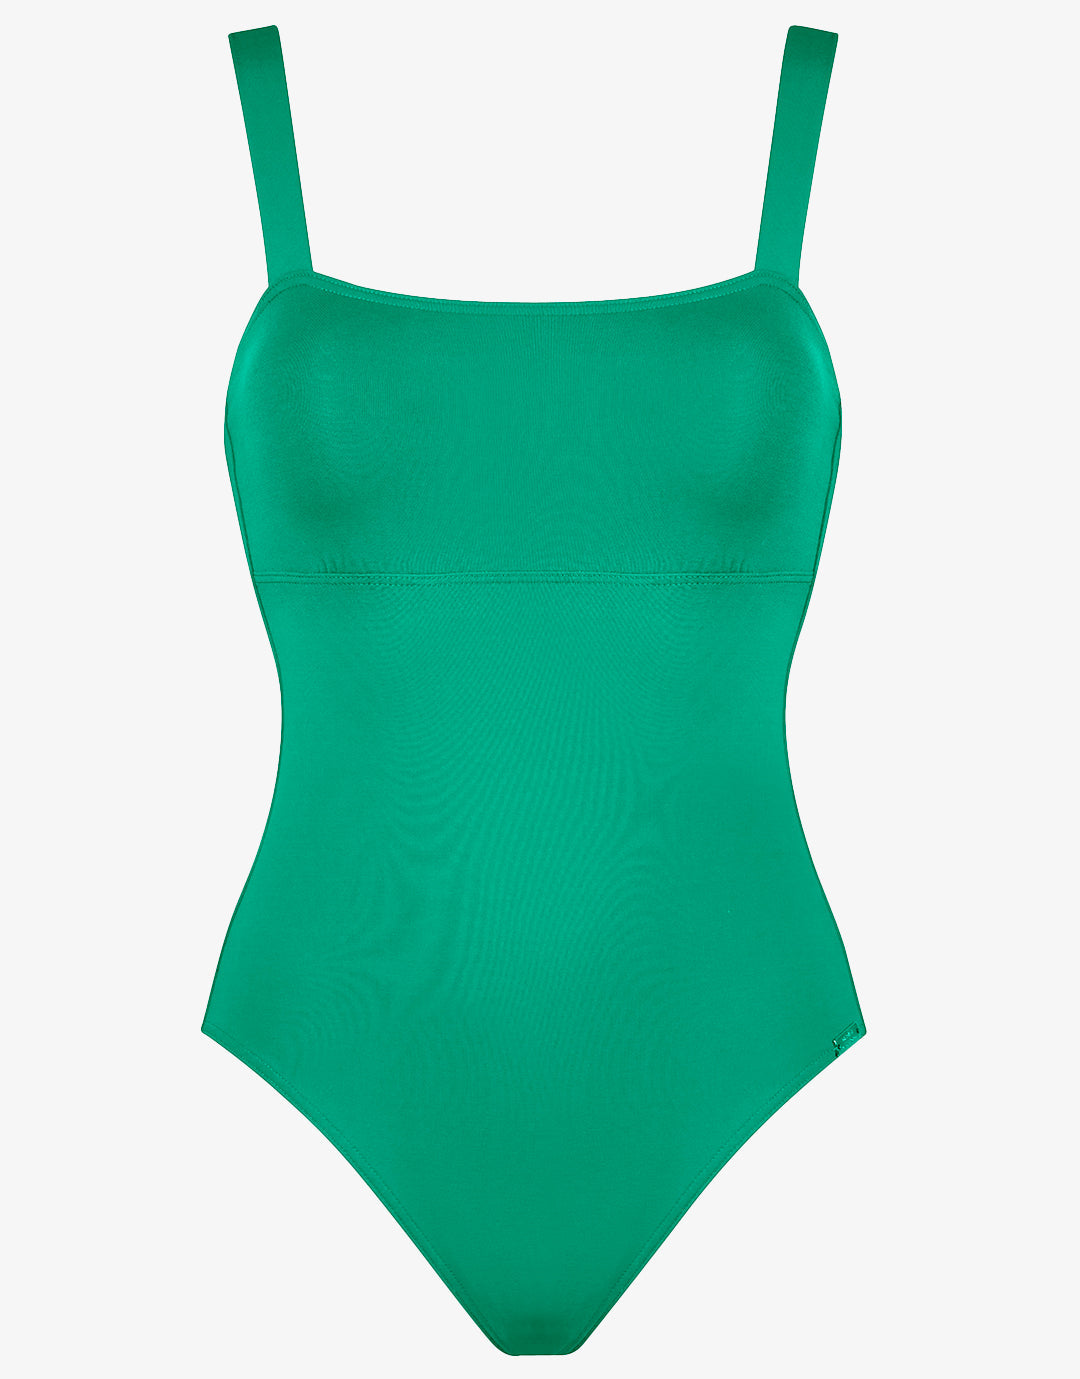 Softline Square-Shaped Swimsuit - Verdant - Simply Beach UK